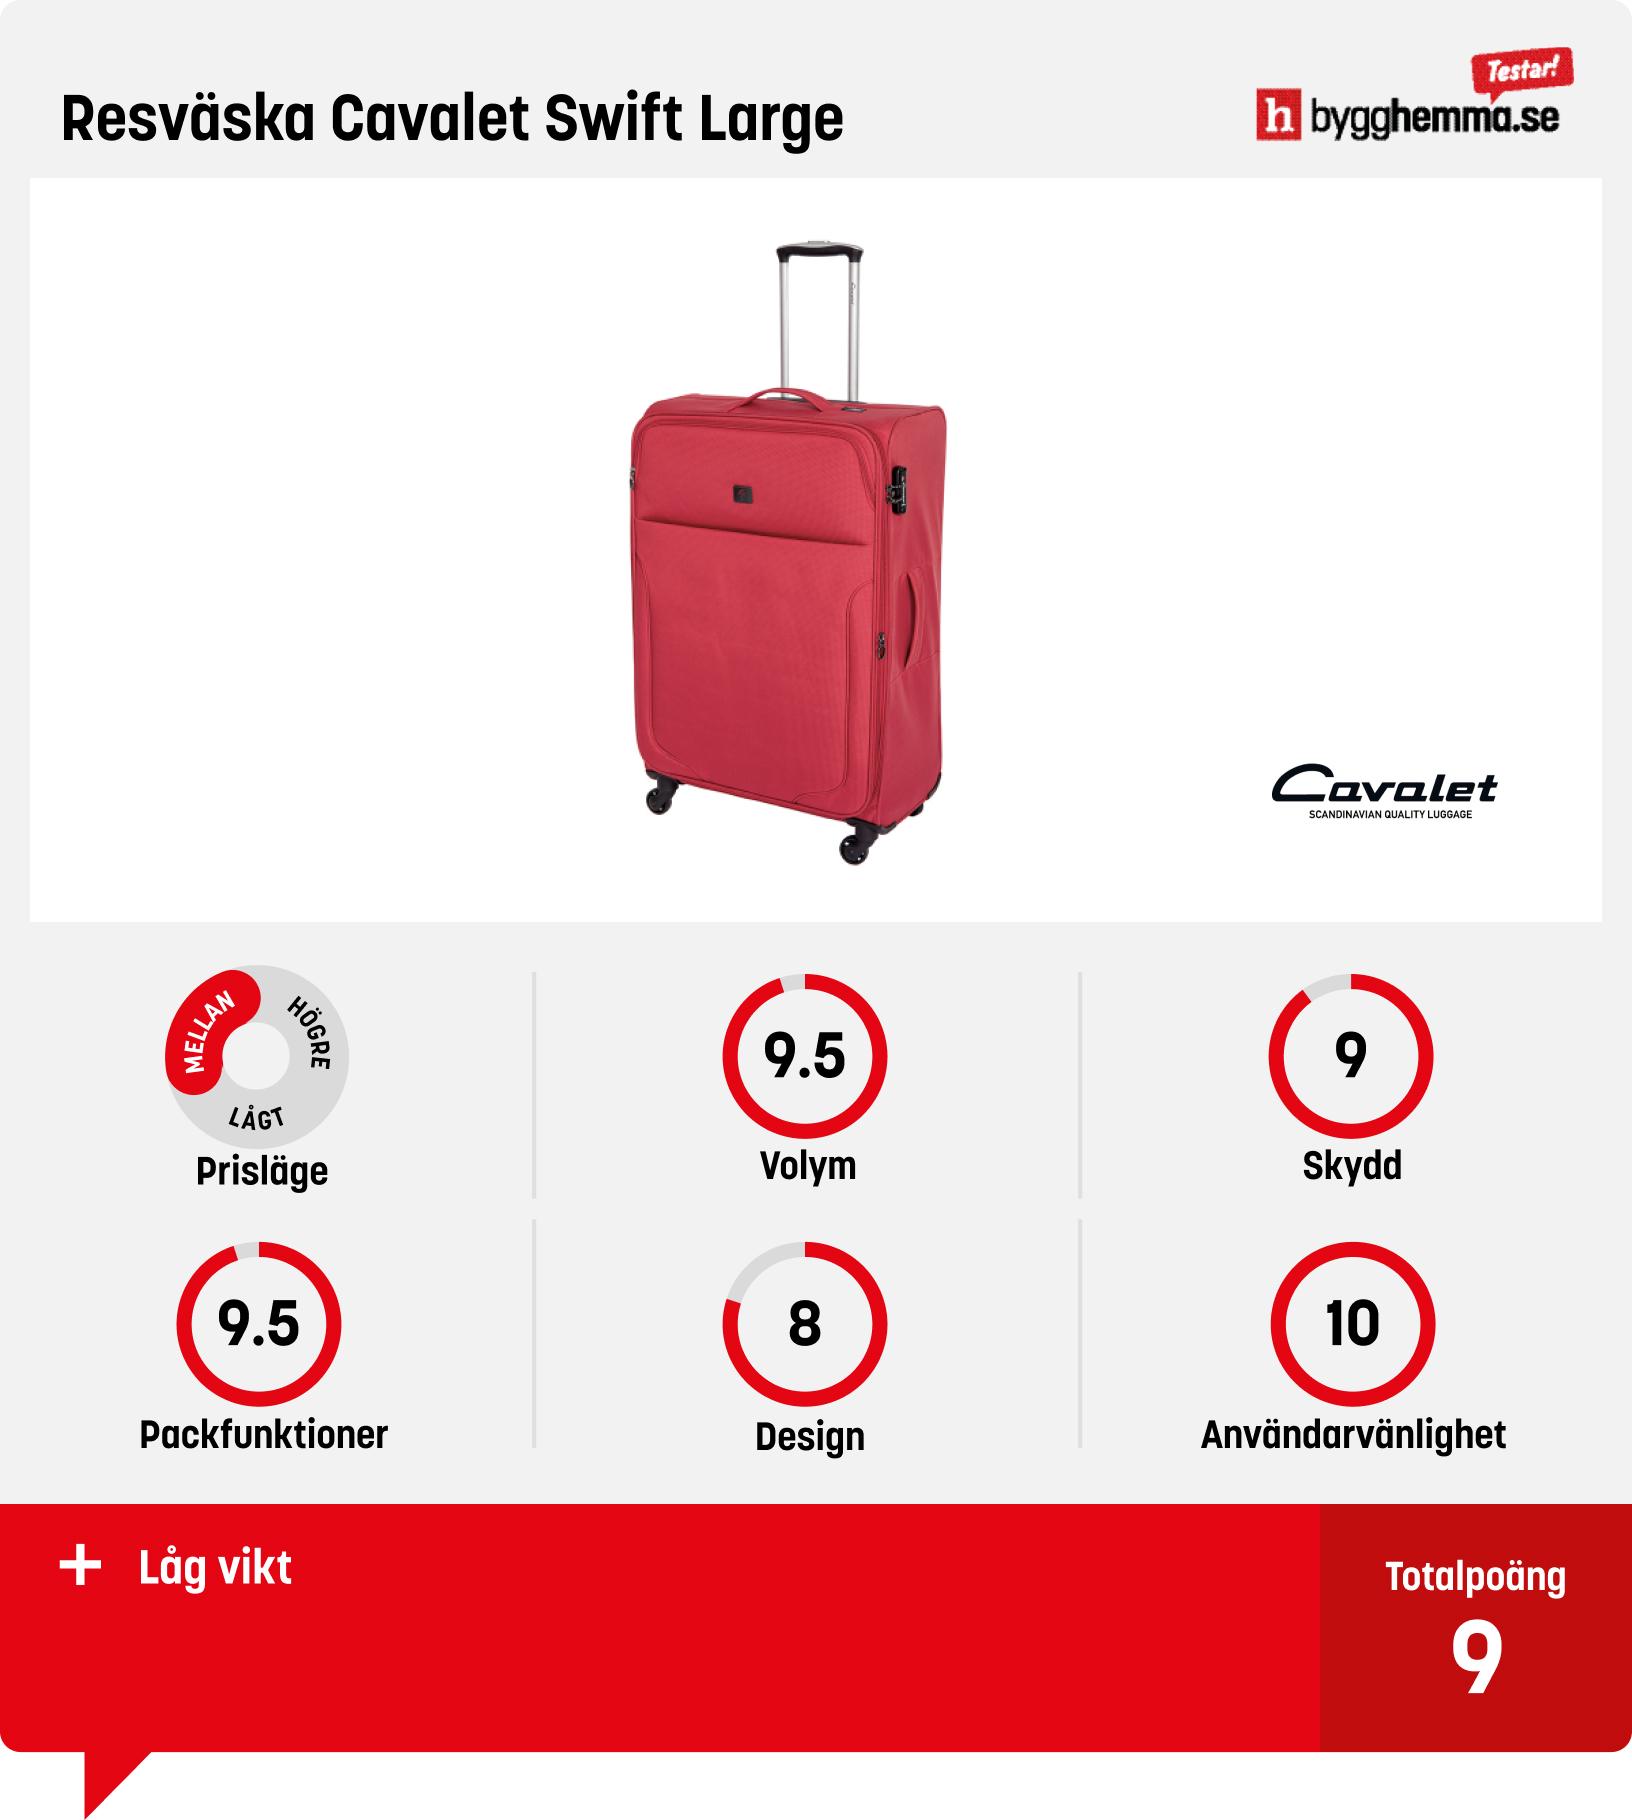 Resväska bäst i test - Resväska Cavalet Swift Large